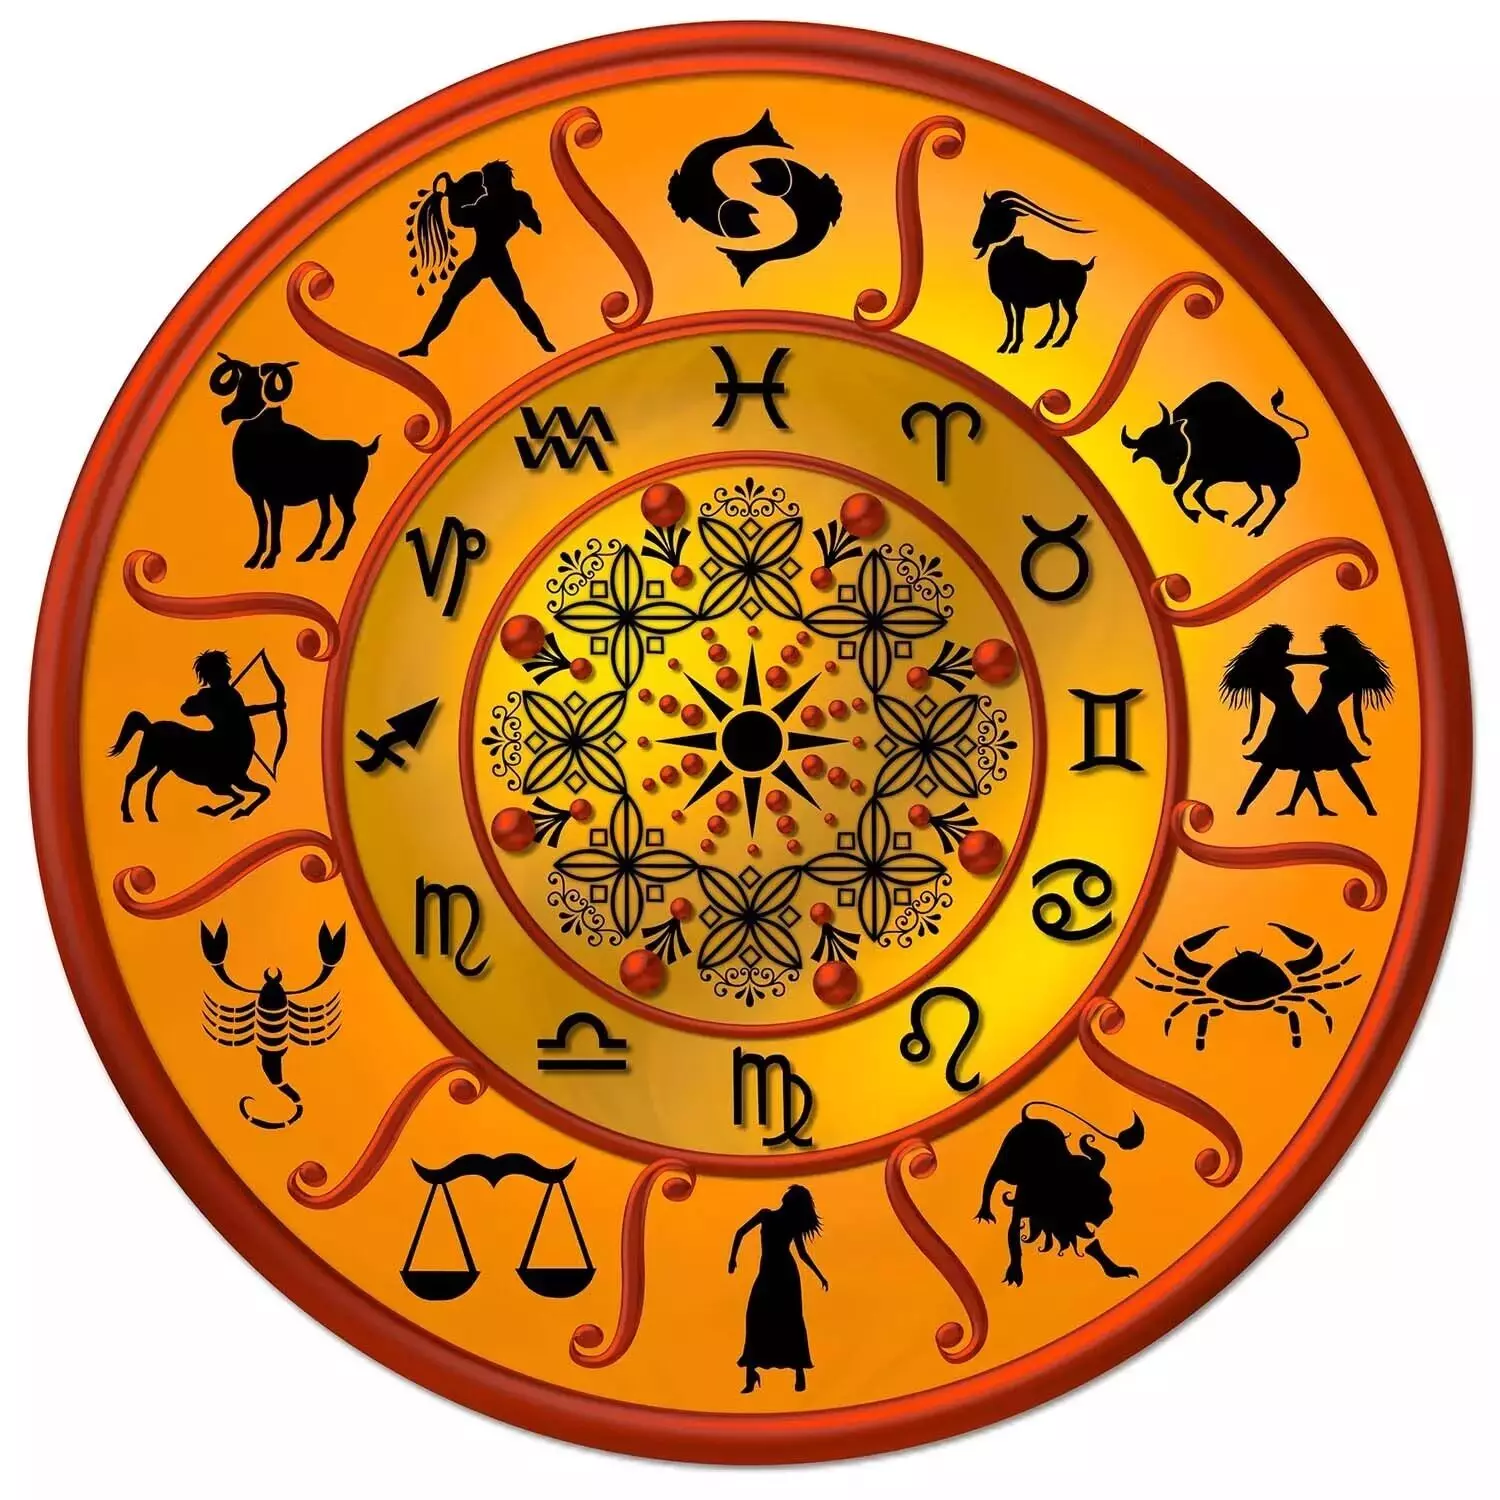 11  Novembar  – Know your todays horoscope